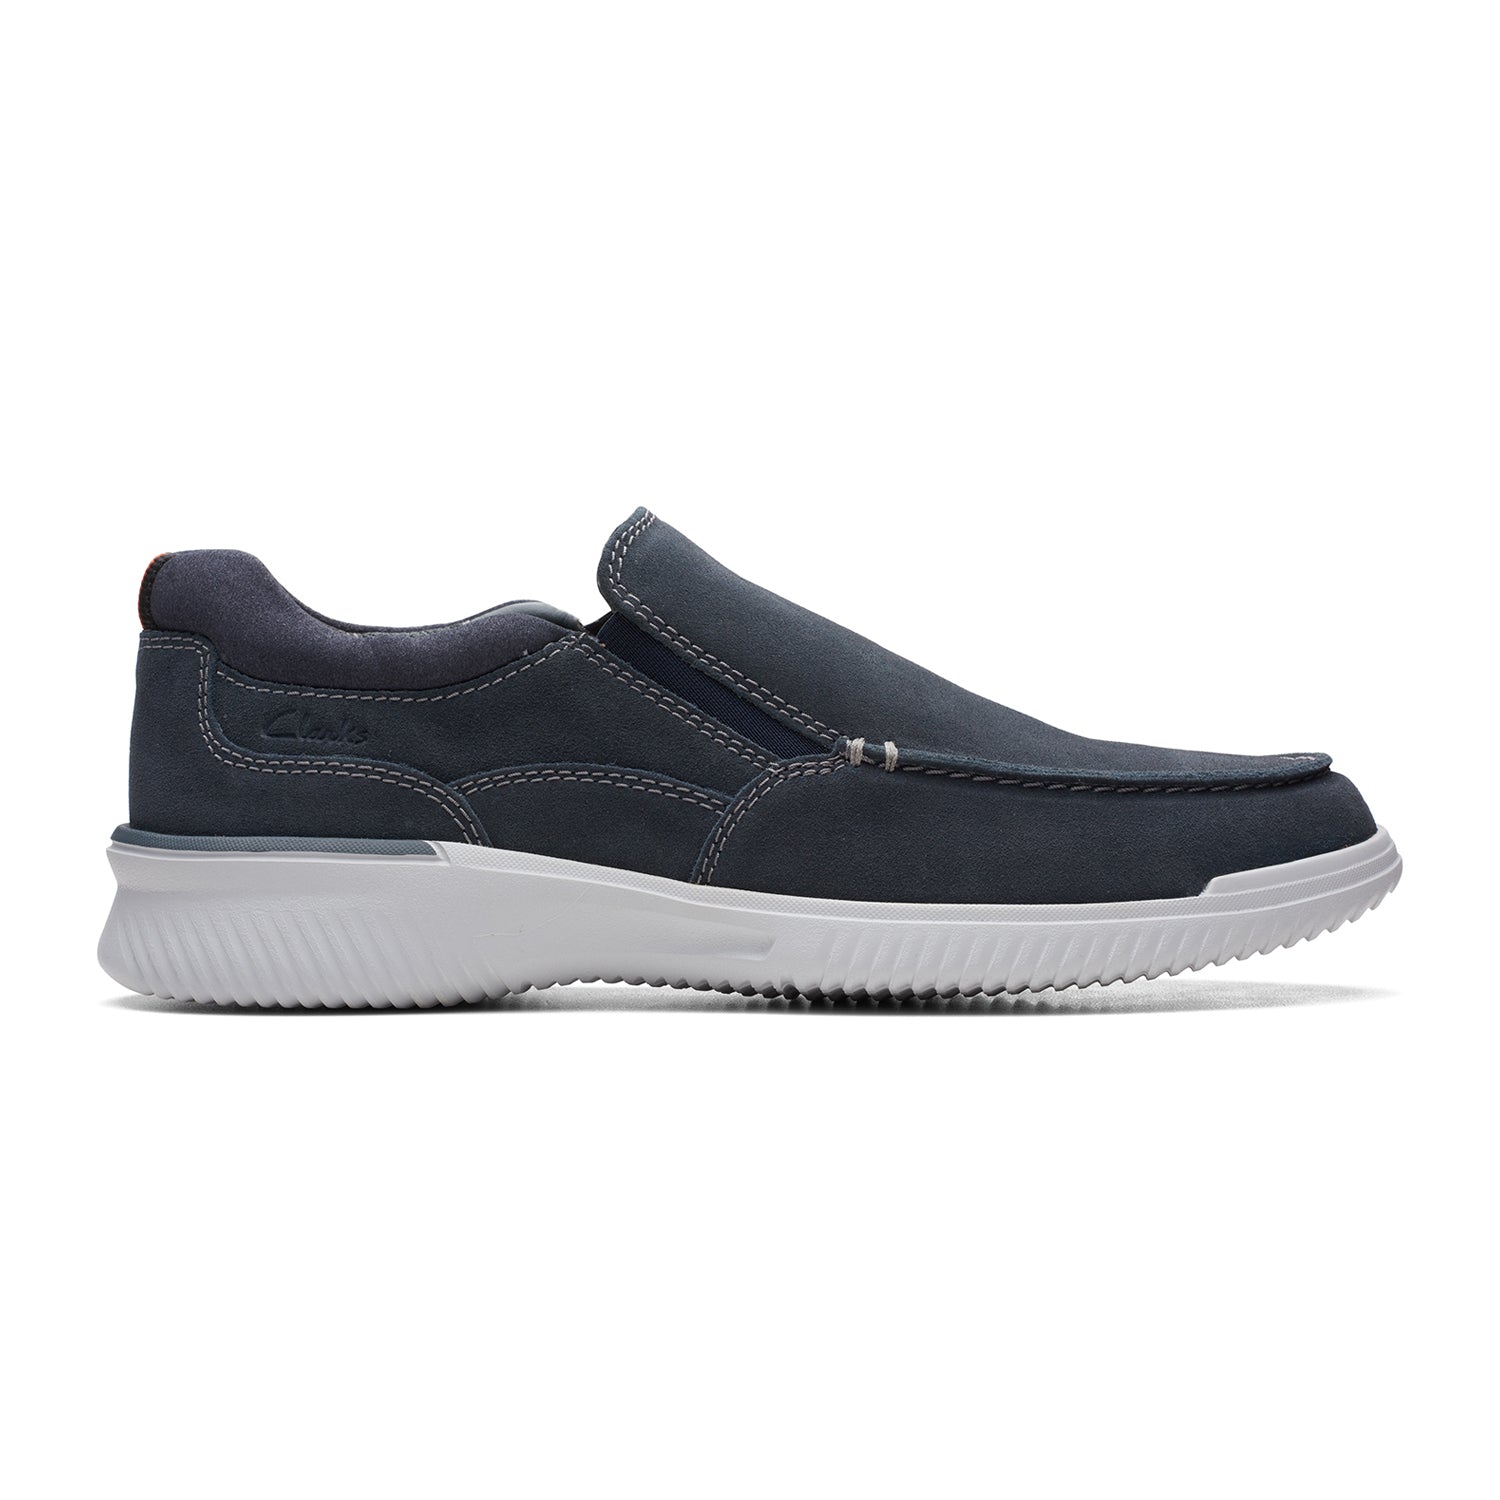 Clarks Donaway Free Shoes - Navy Waxy - 261659857 - G Width (Standard Fit)